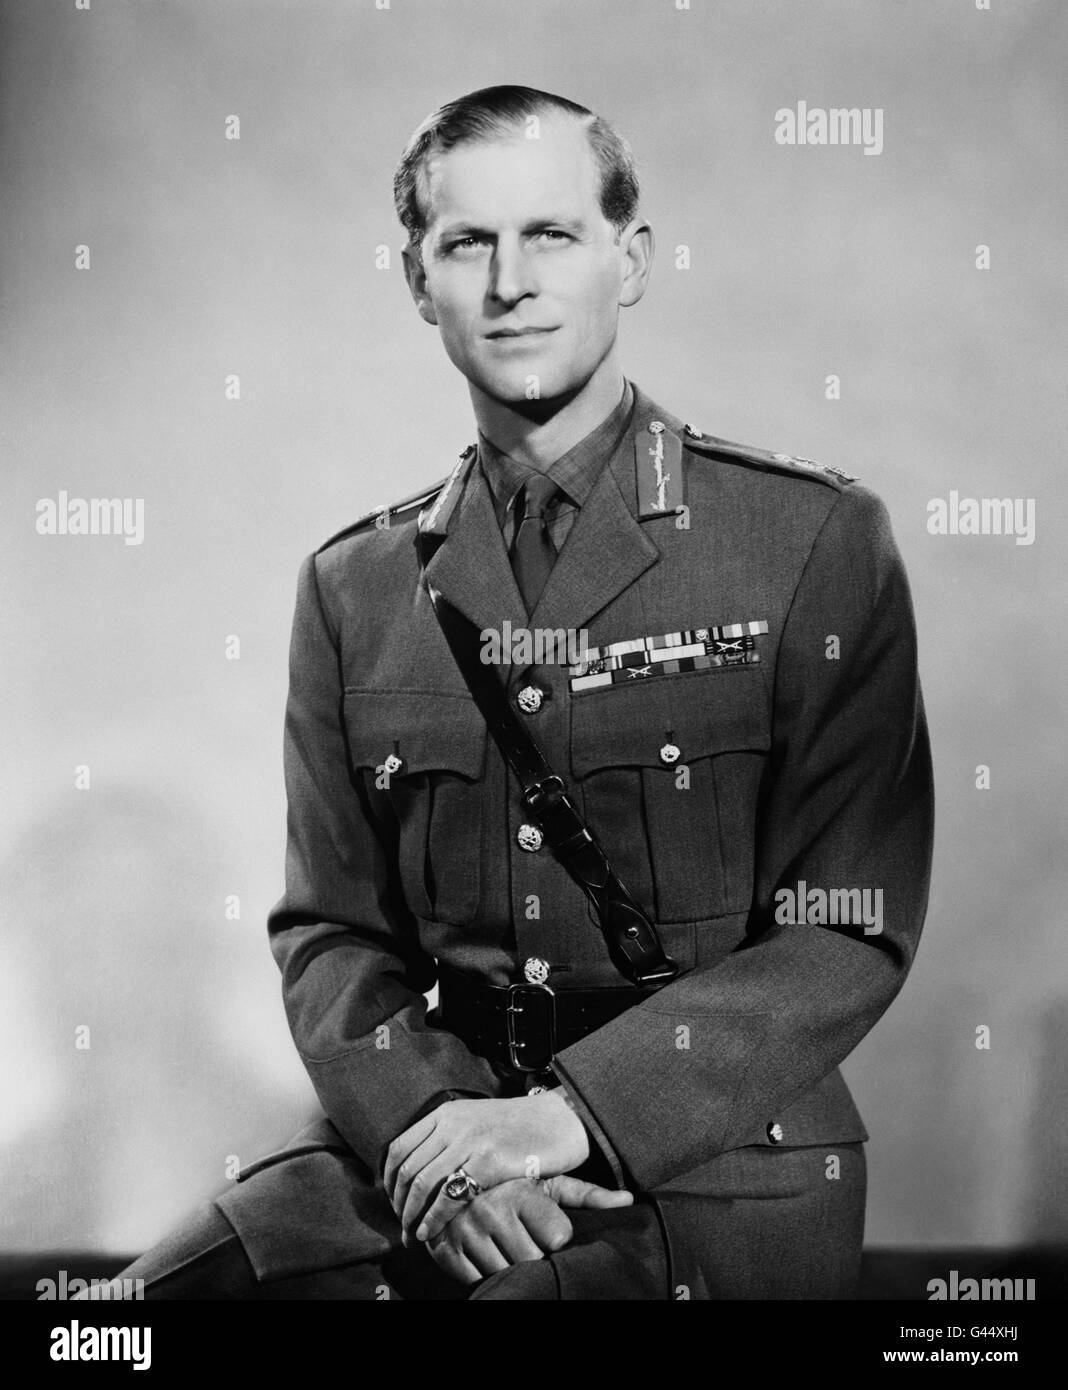 British army uniform Black and White Stock Photos & Images - Alamy